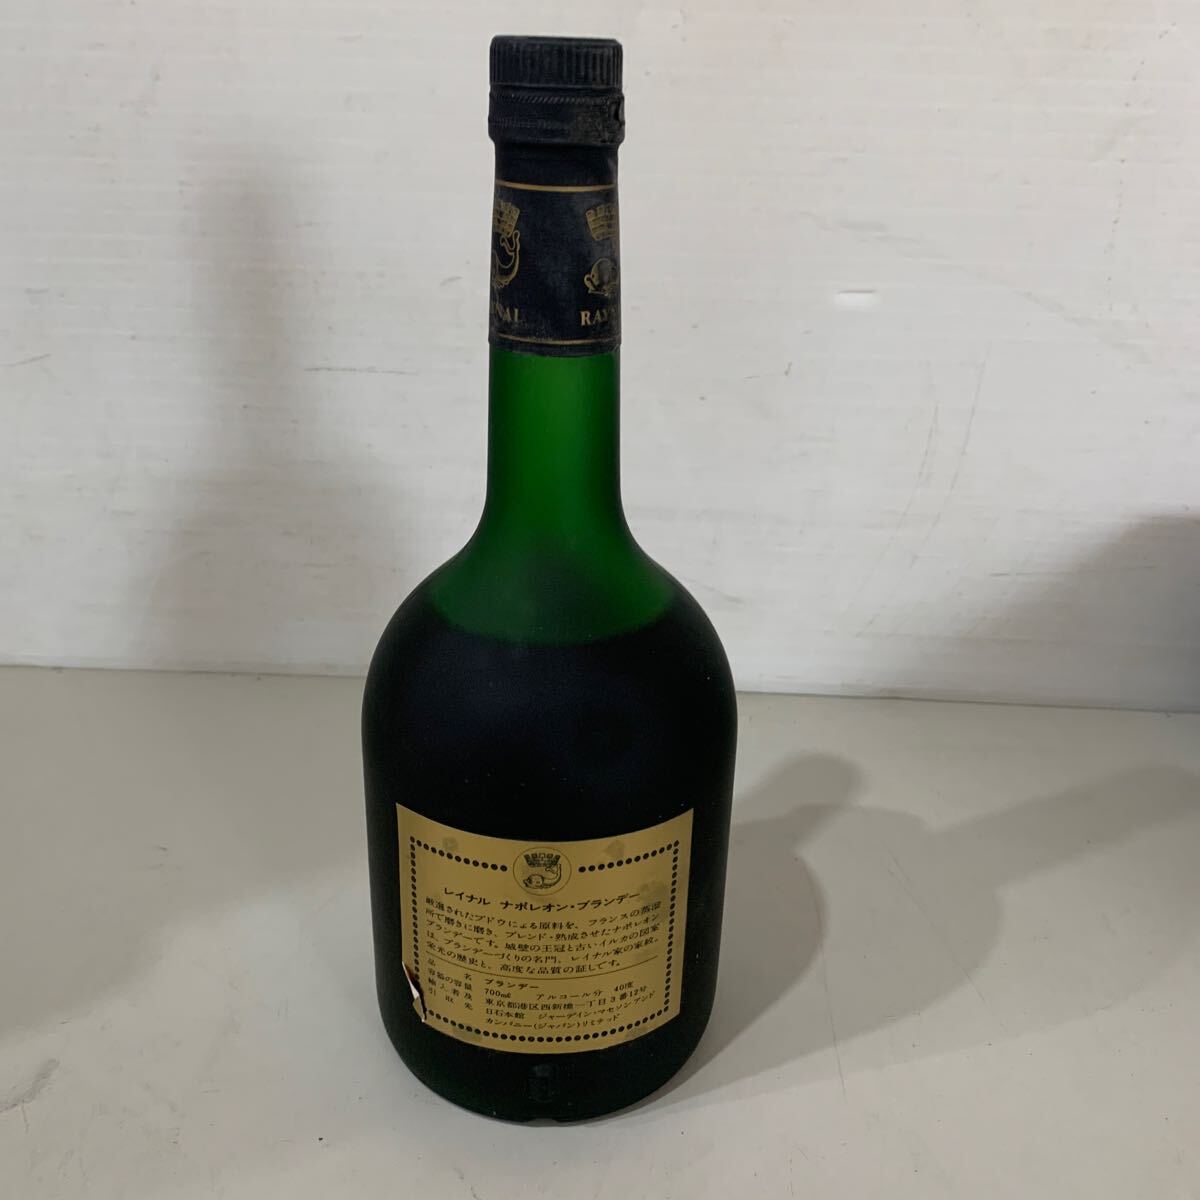 QW3812 not yet . plug RAYNAL NAPOLEON Dauphin Ray naru Napoleon do- fan 40% 700ml brandy foreign alcohol old sake 0506